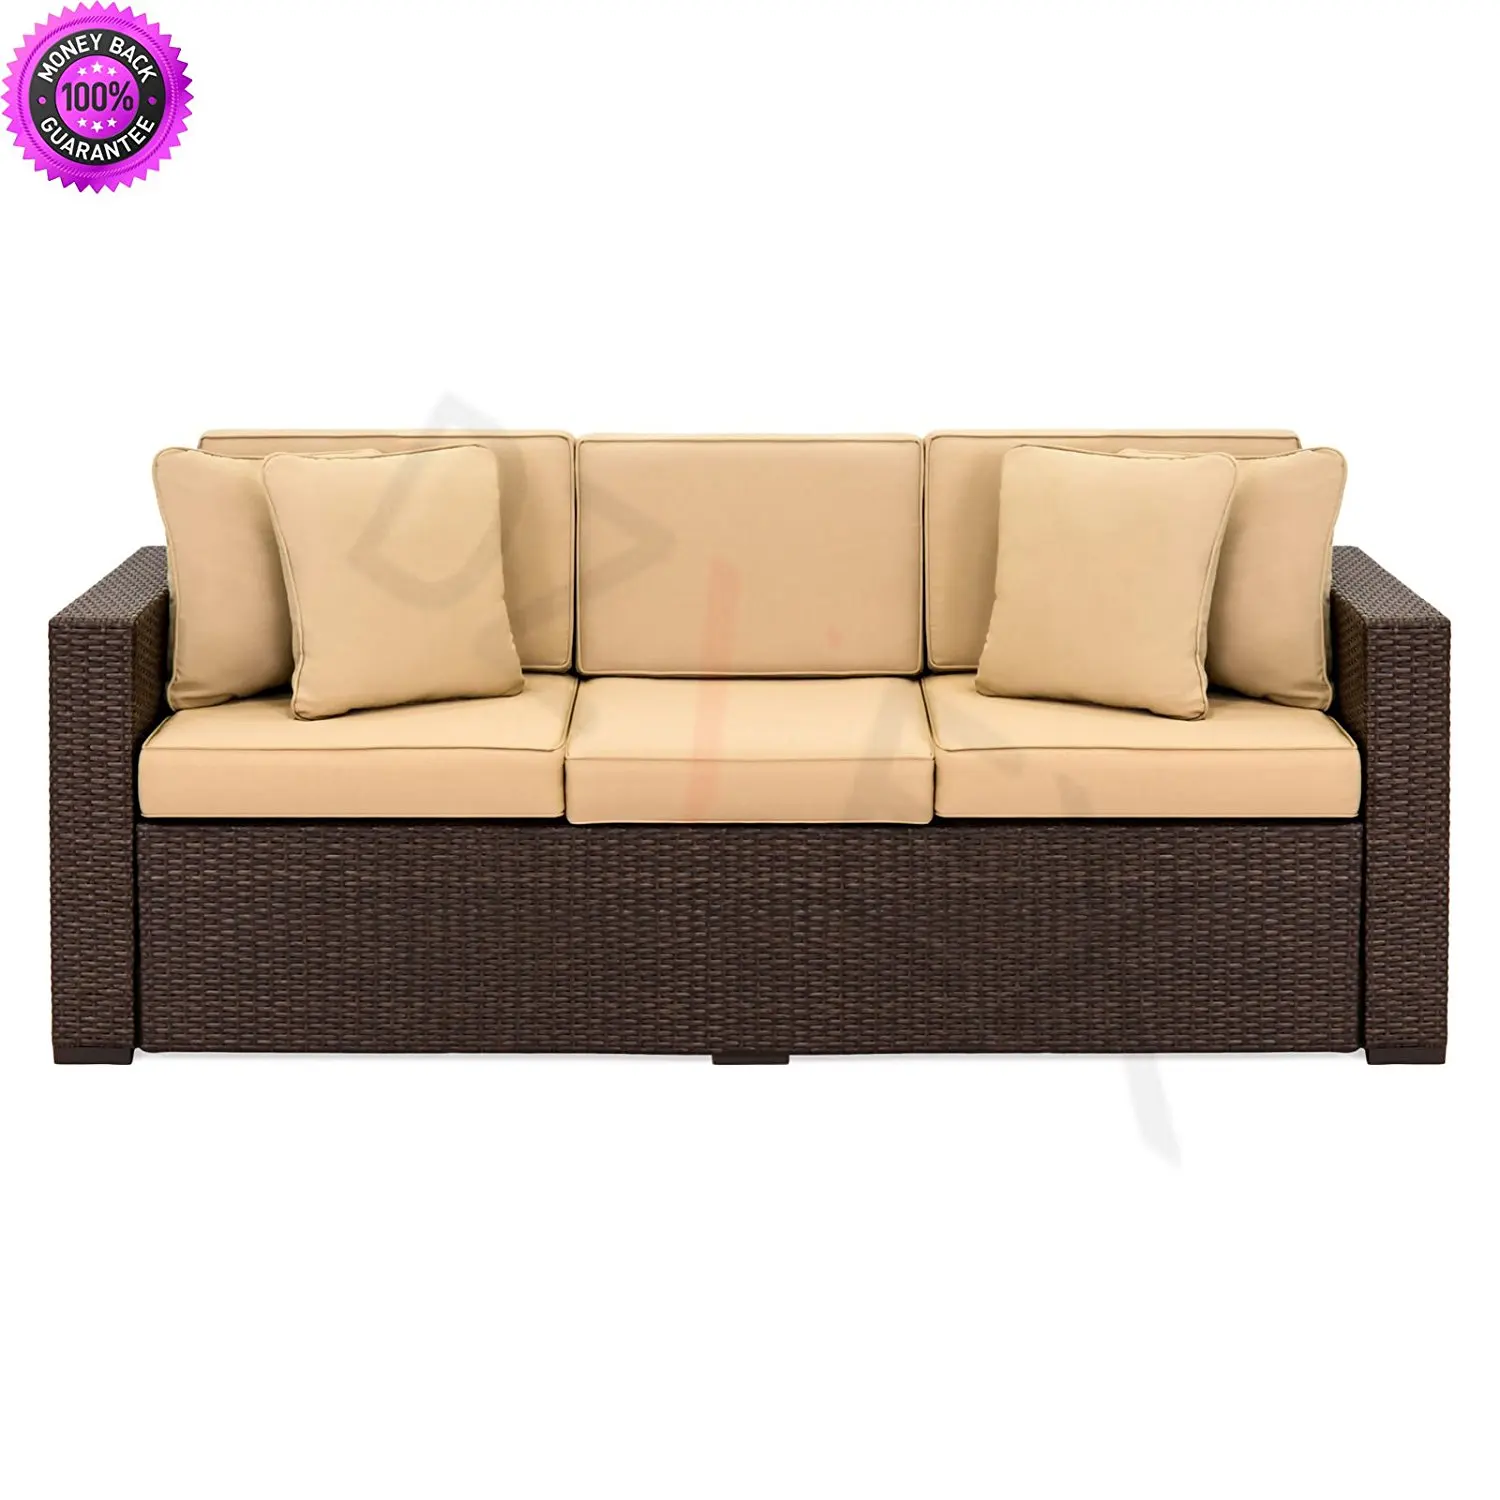 Buy DzVeX Outdoor Wicker Patio Furniture Sofa 3 Seater Luxury Comfort Brown Wicker Couch And ...